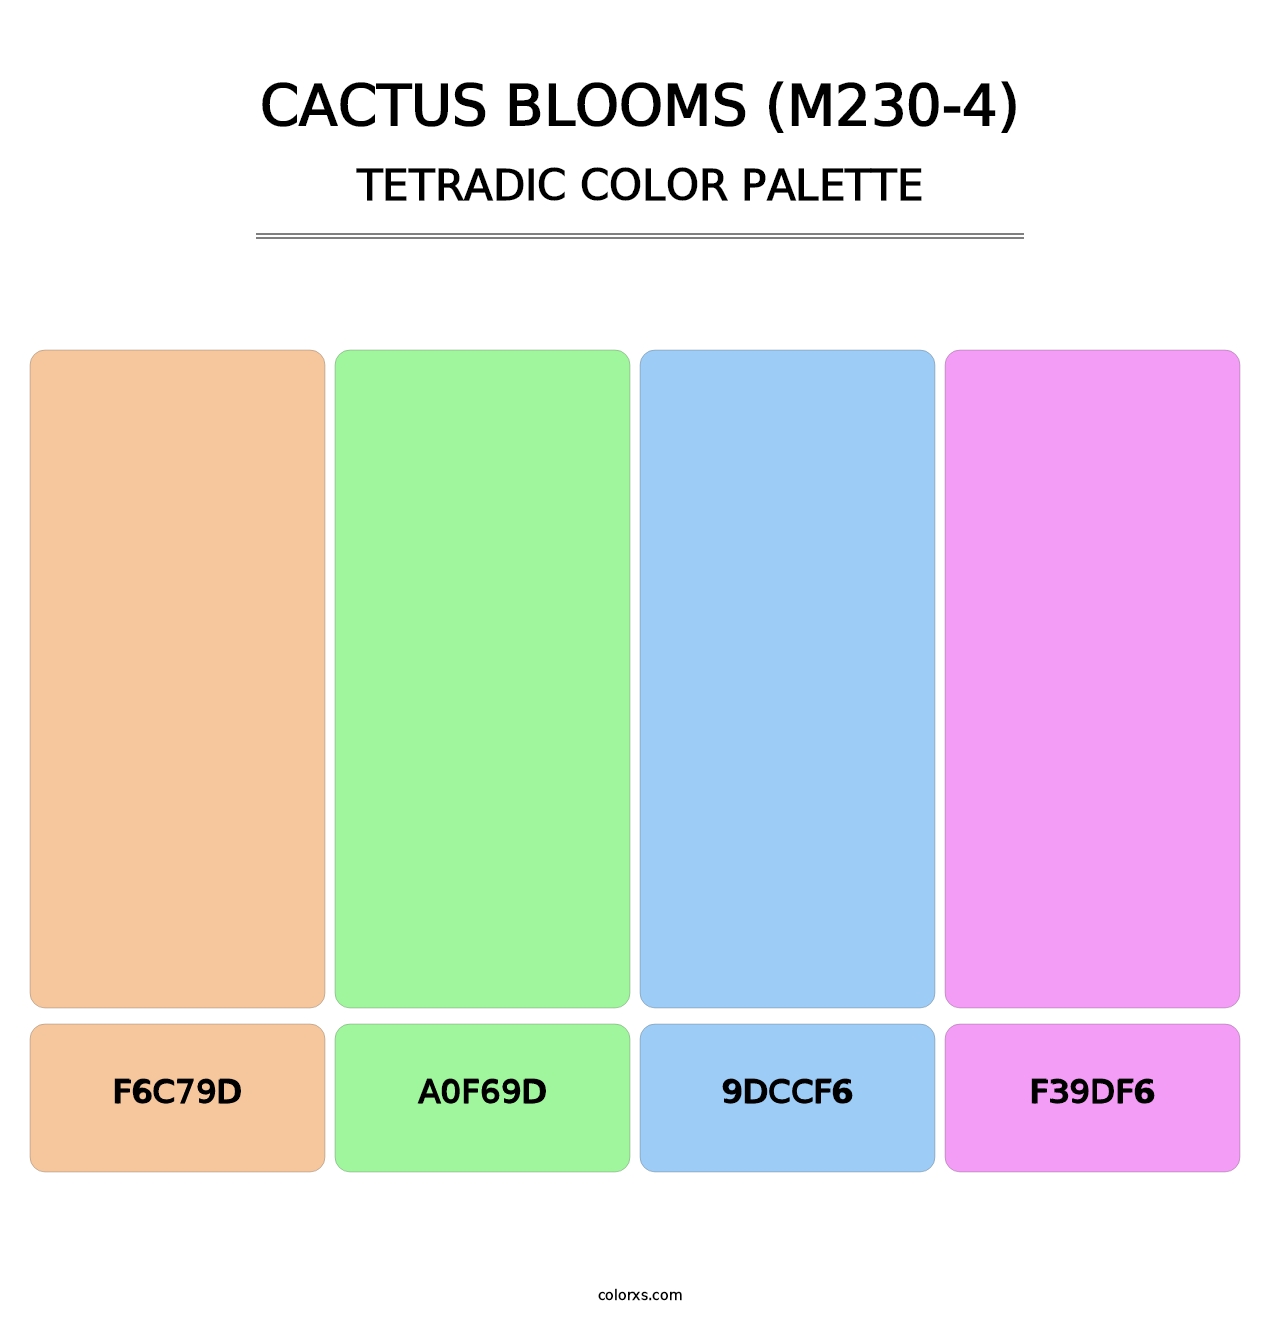 Cactus Blooms (M230-4) - Tetradic Color Palette